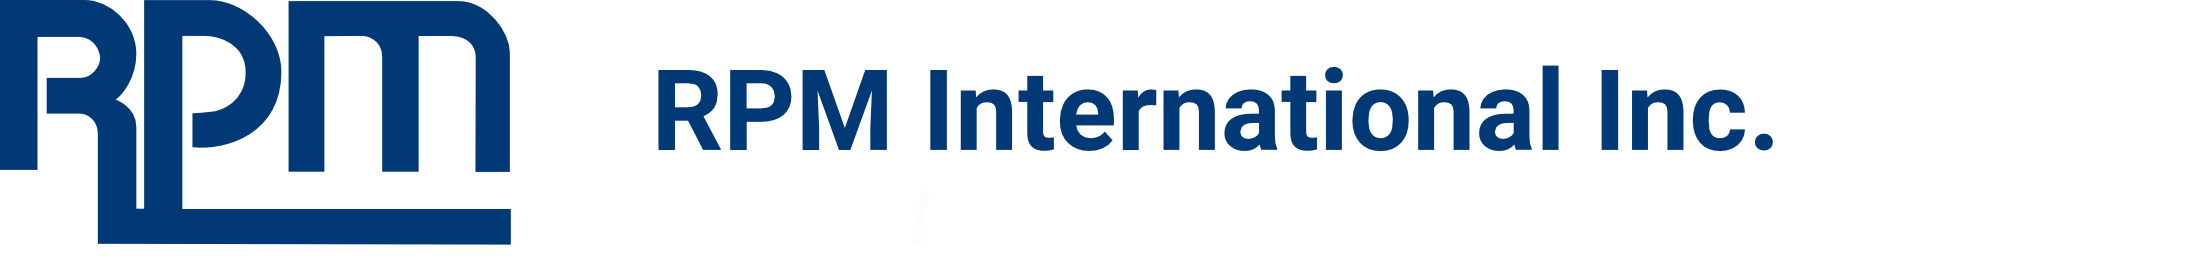 RPM International Inc logo